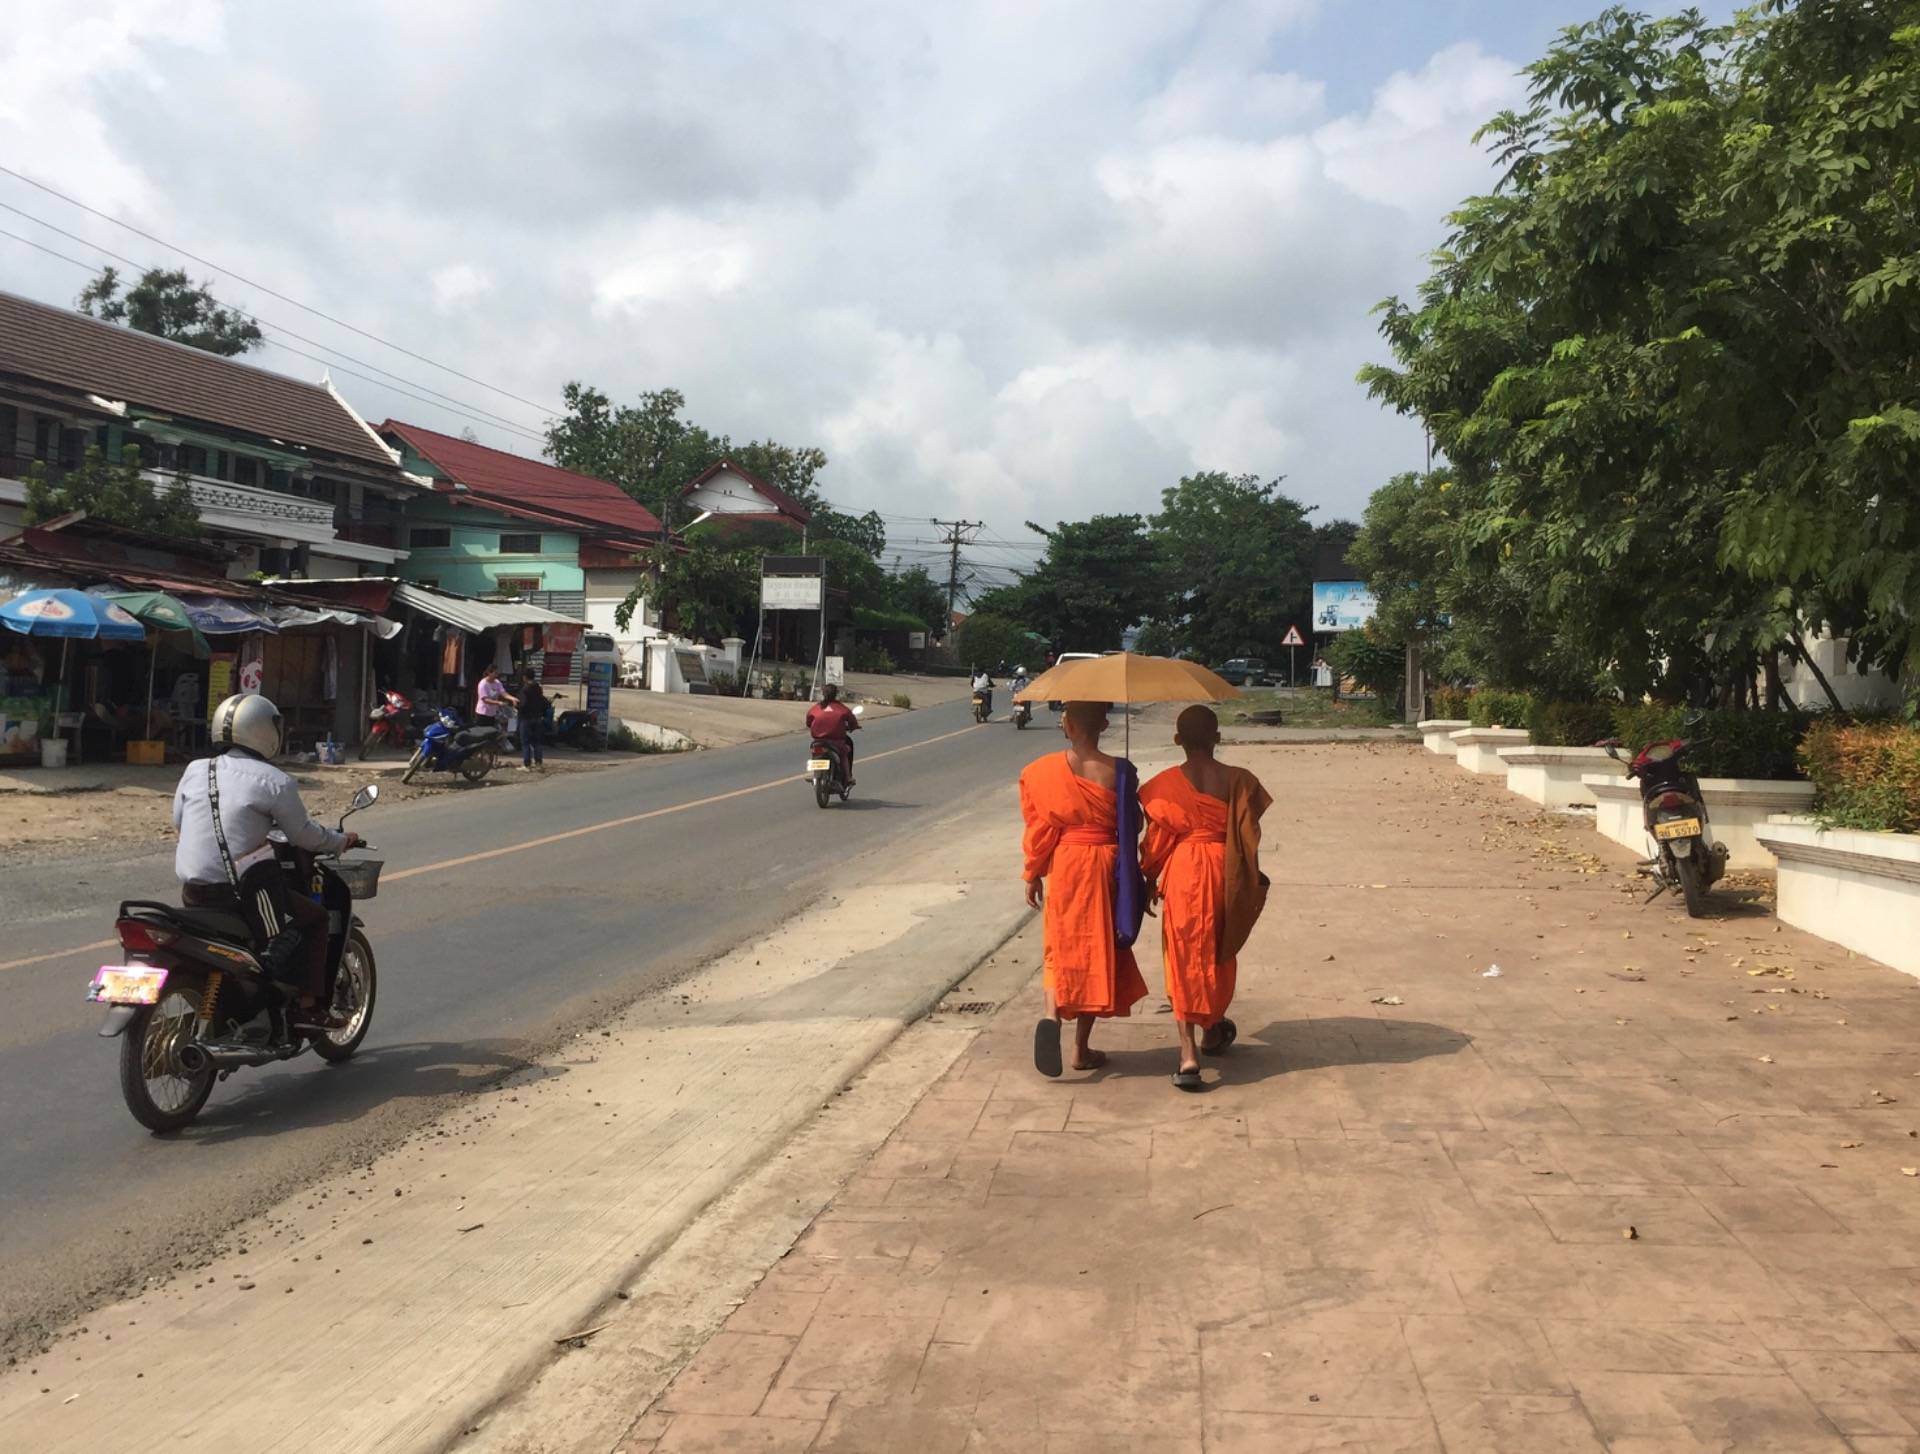 Walking Zen: Getting Visa Extensions in Luang Prabang